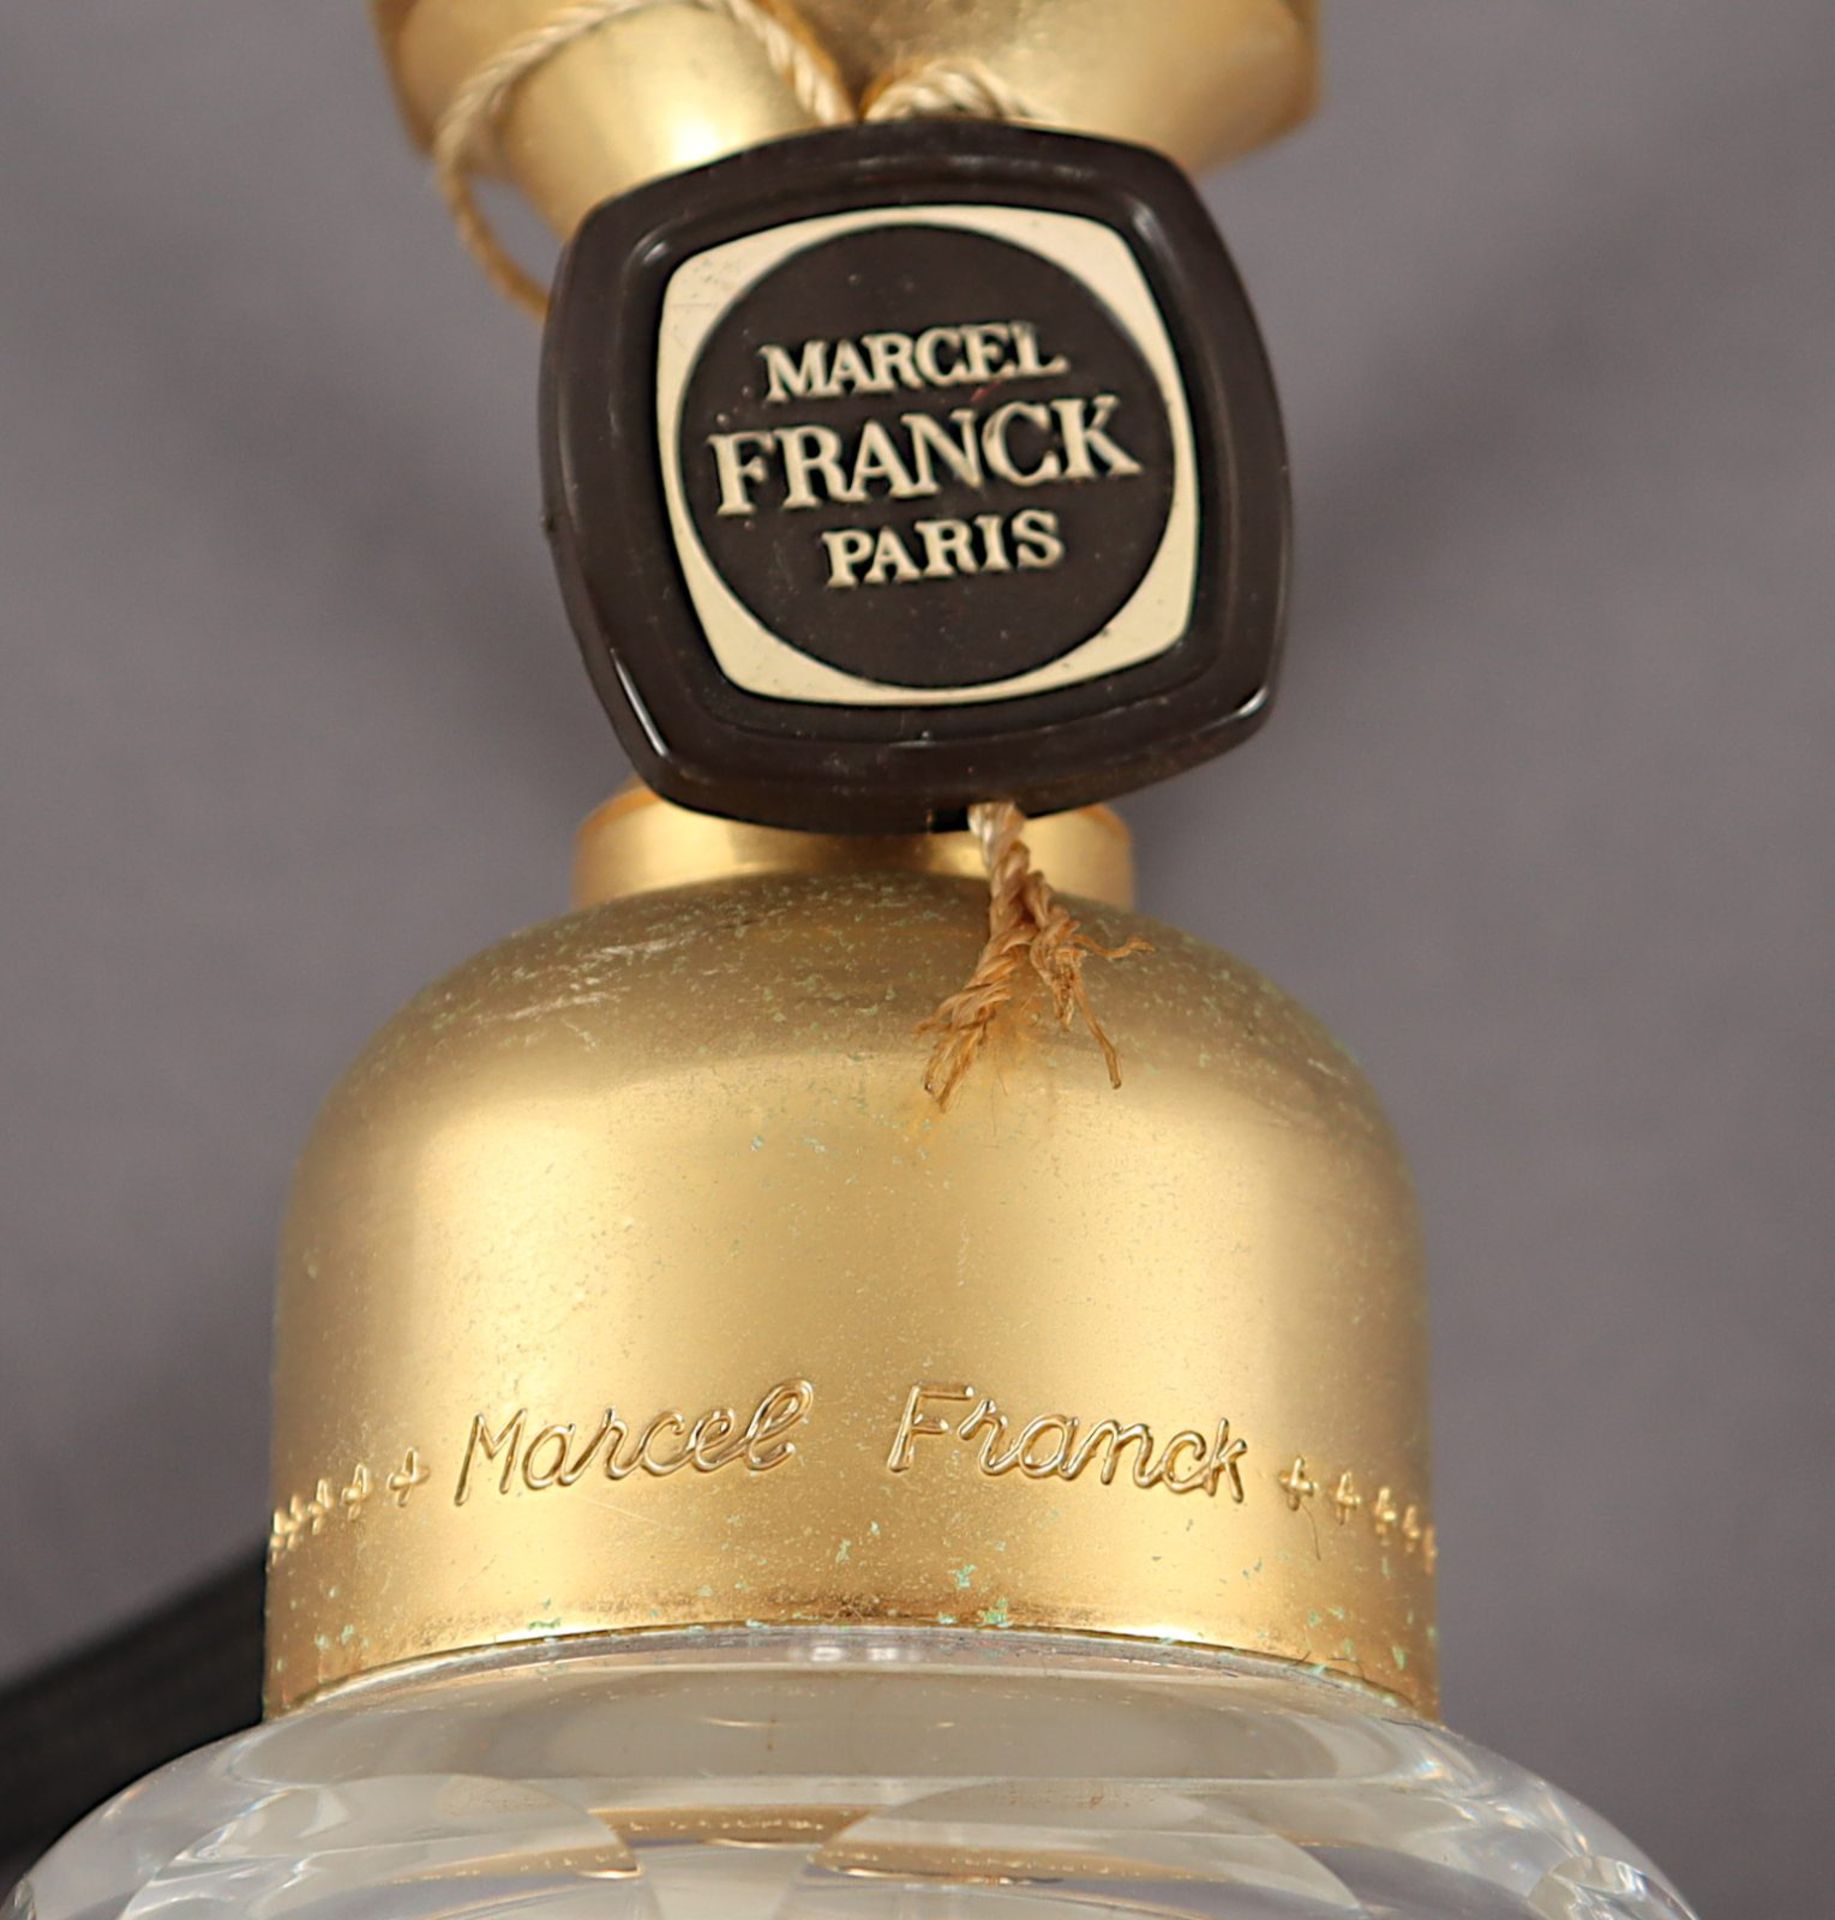 Großer Parfumflacon, Marcel Franck/Paris - Bild 2 aus 2